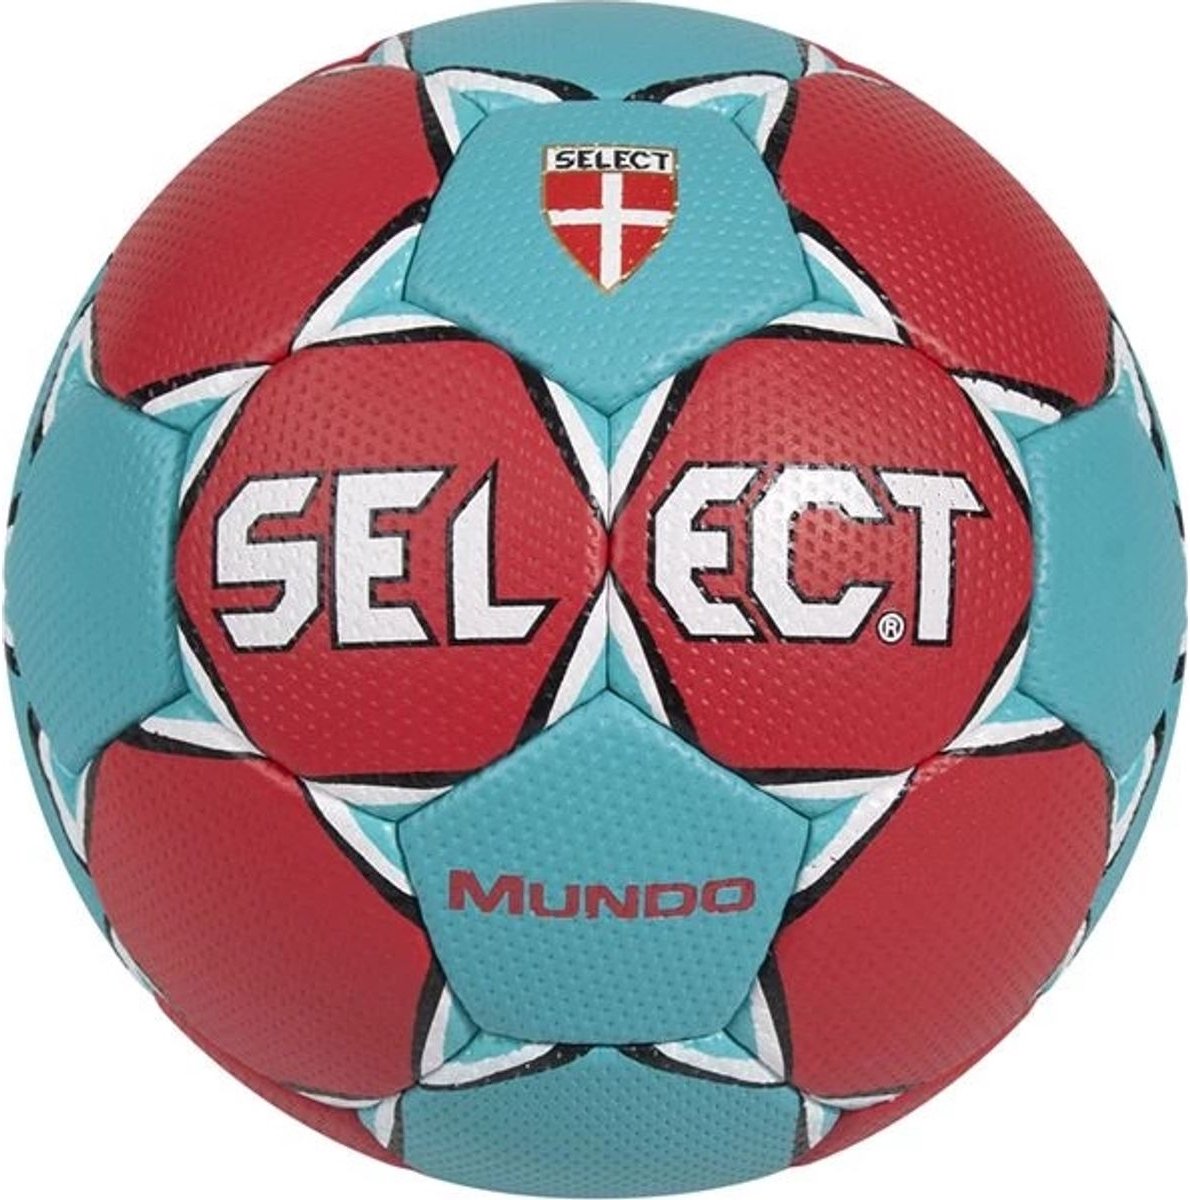 Select Mundo V22 Handbal - Lichtblauw / Rood | Maat: 0-KIDS